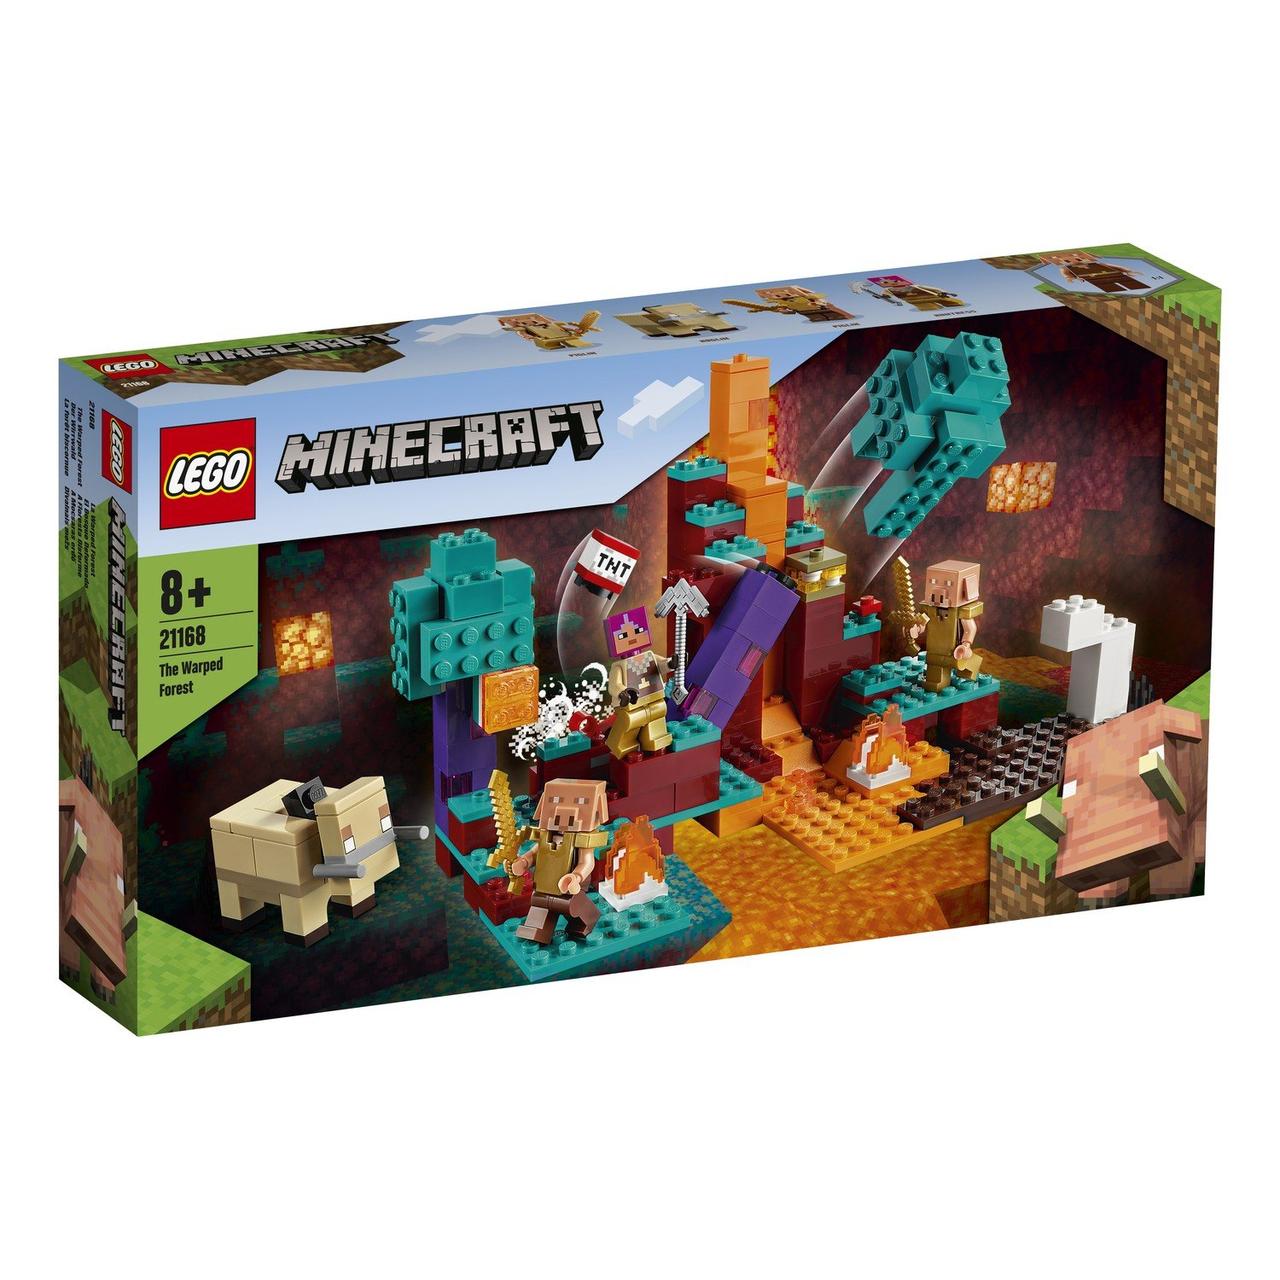 21168 Lego Minecraft Искажённый лес, Лего Майнкрафт